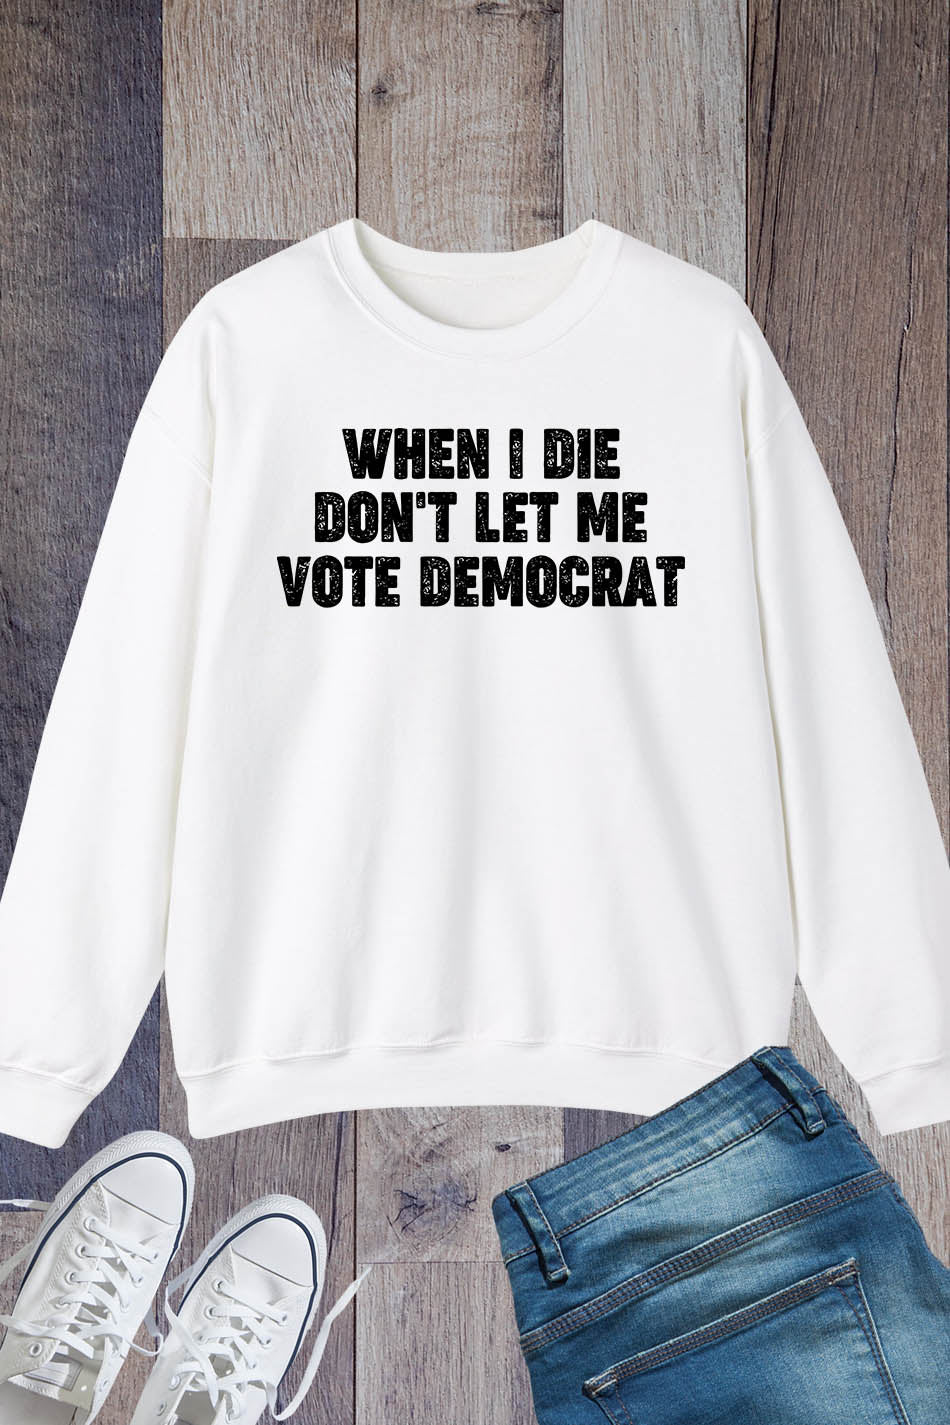 Pro America Anti Biden Politics Sweatshirt